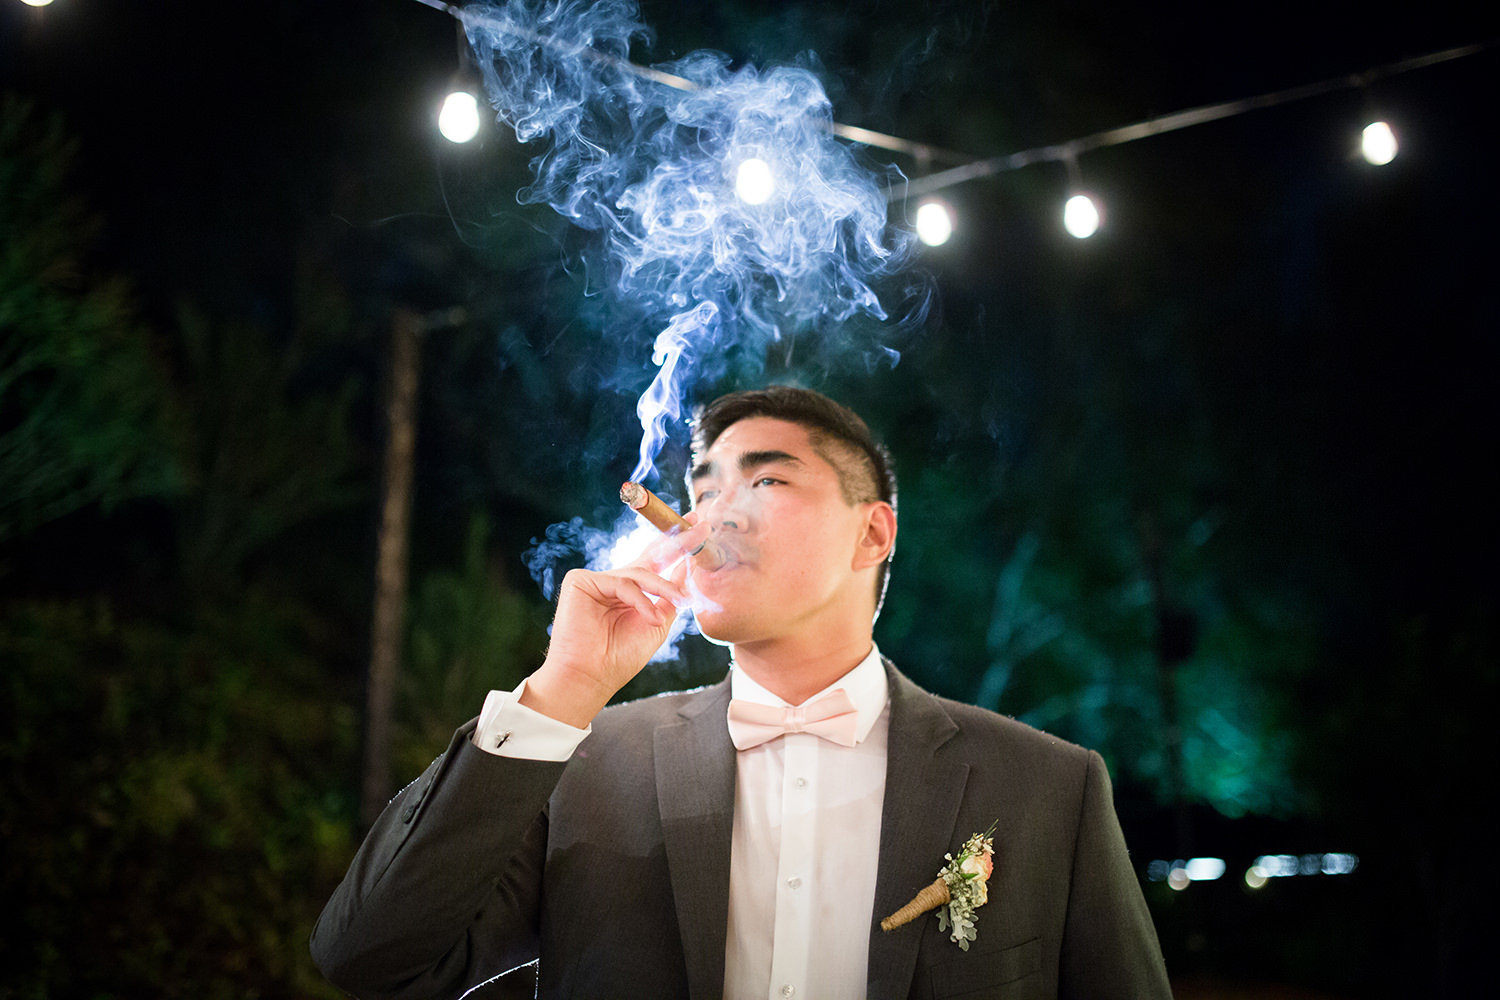 great nightshot of groom with cigar